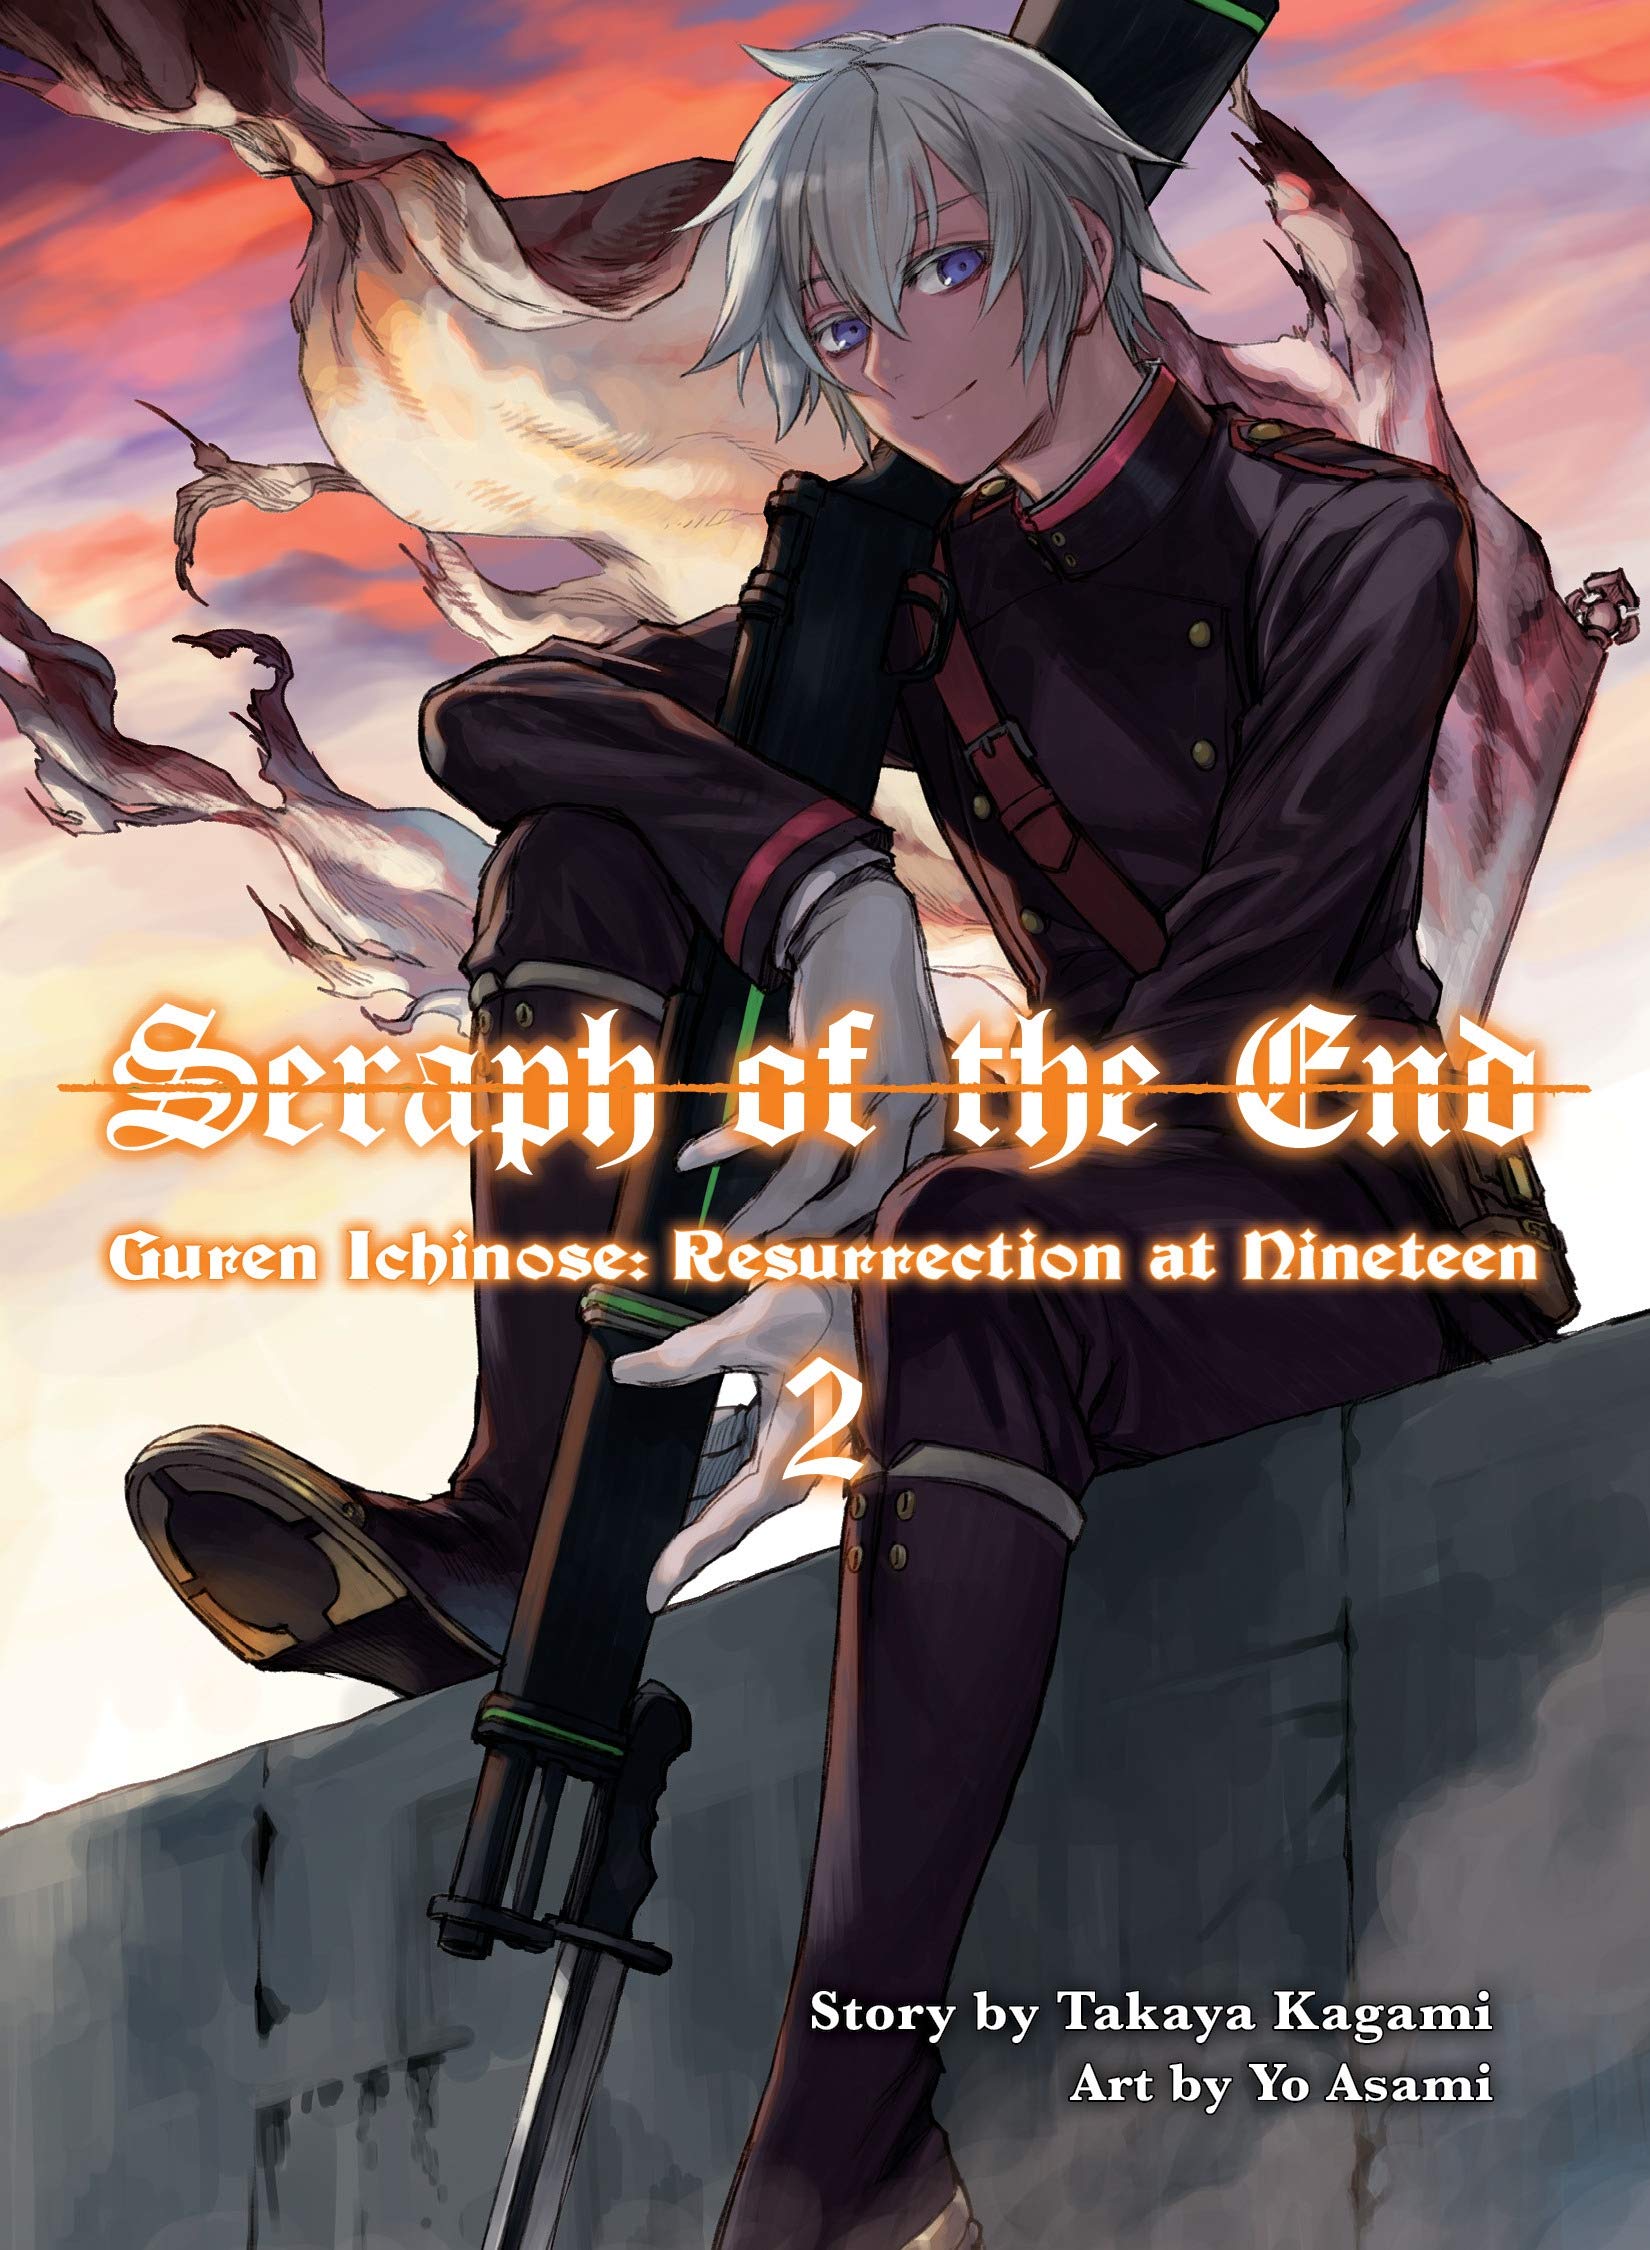 Seraph of the End: Guren Ichinose, Resurrection at Nineteen - Volume 2 (Light Novel)